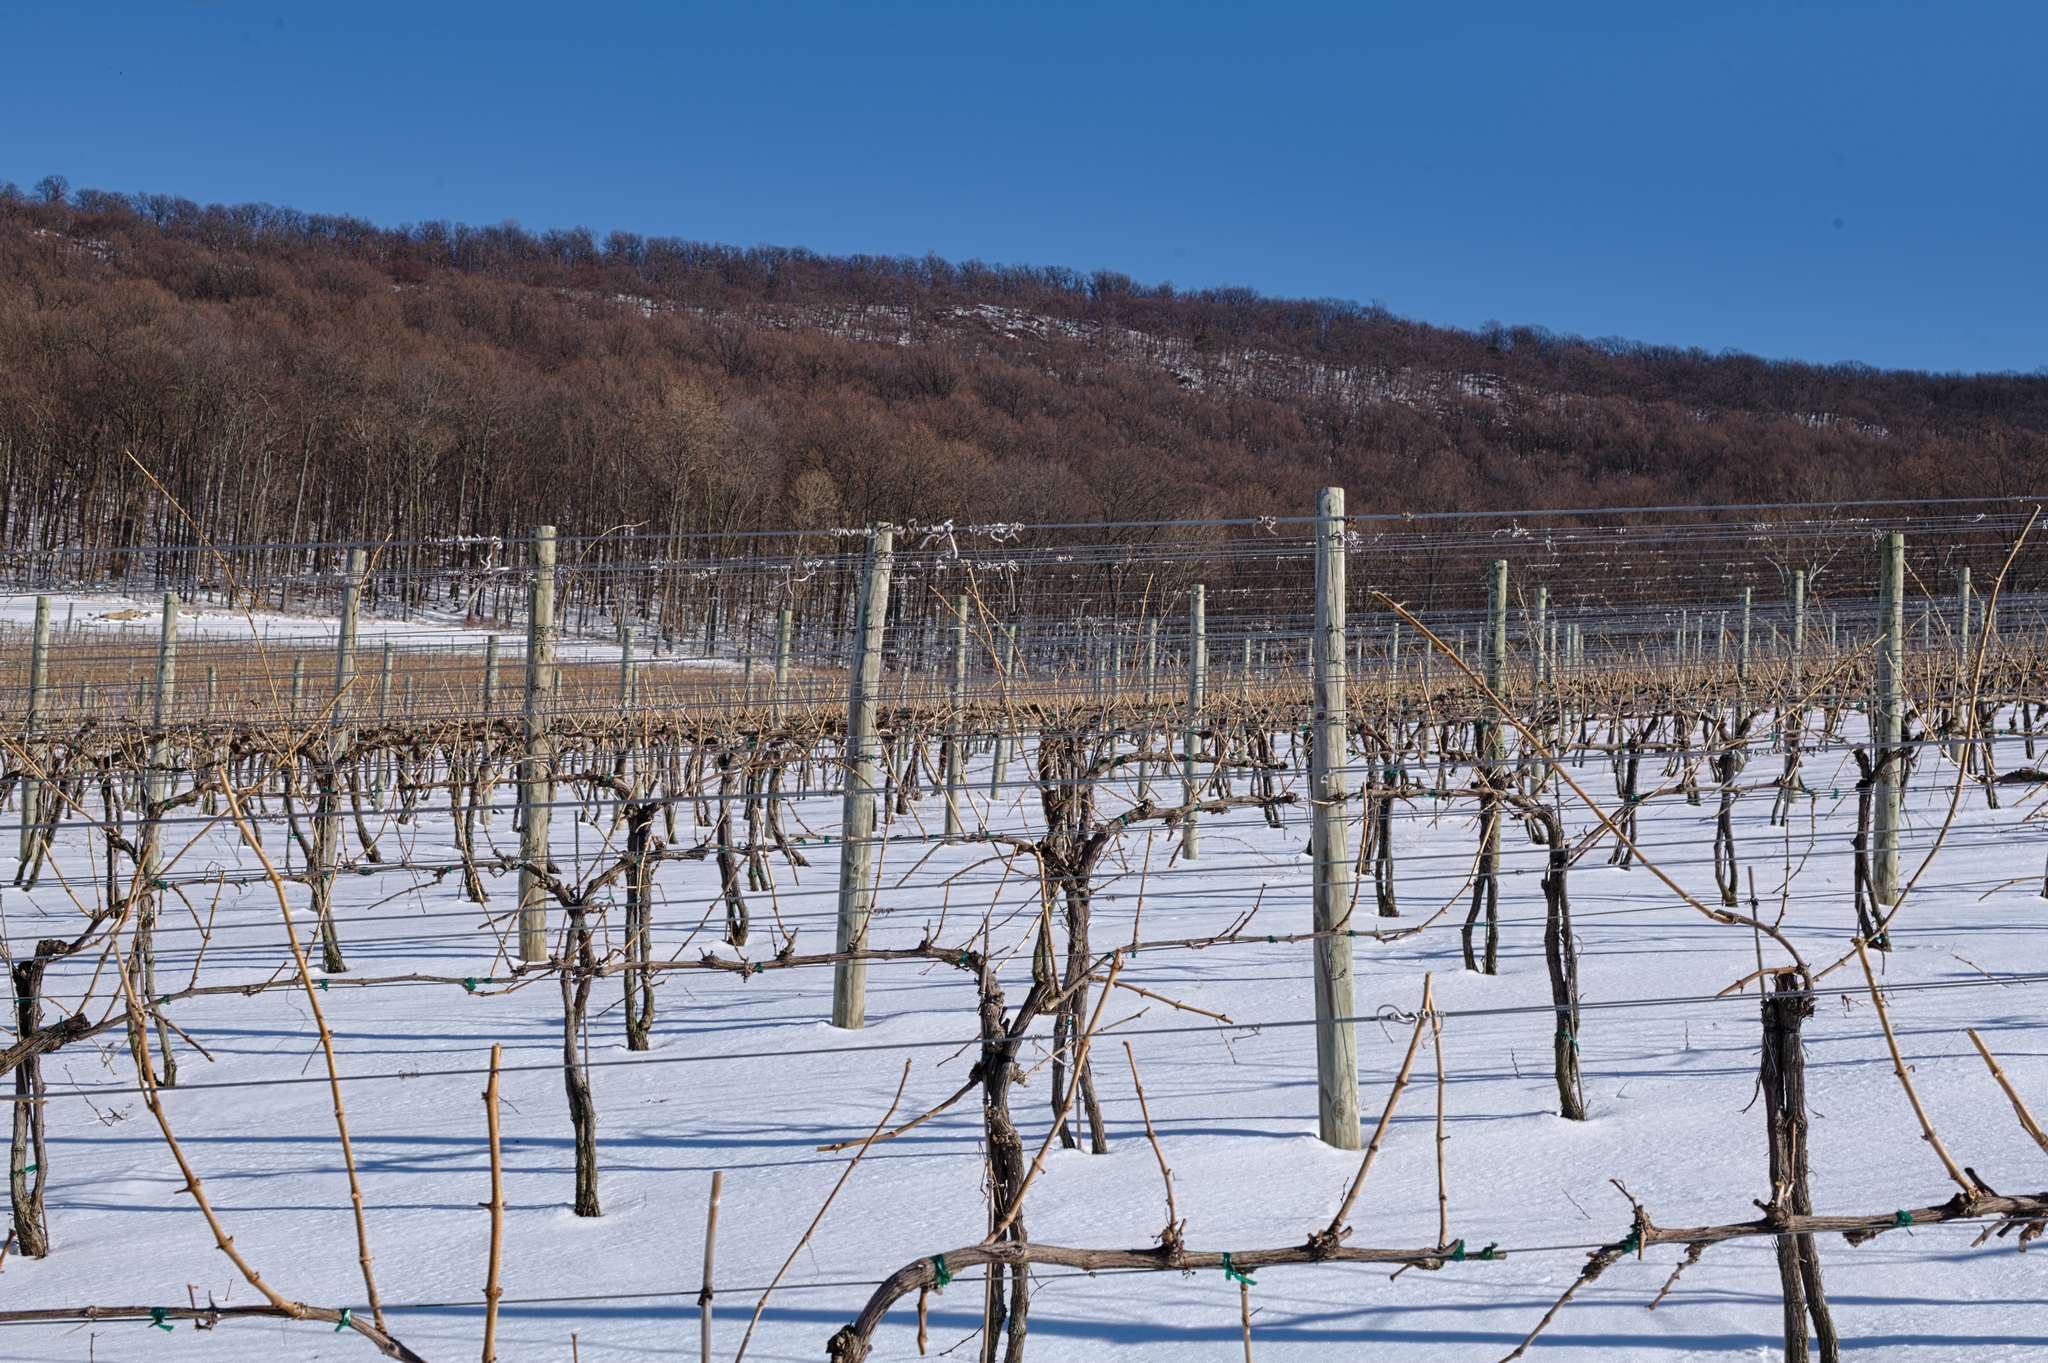 Winter vines with snow